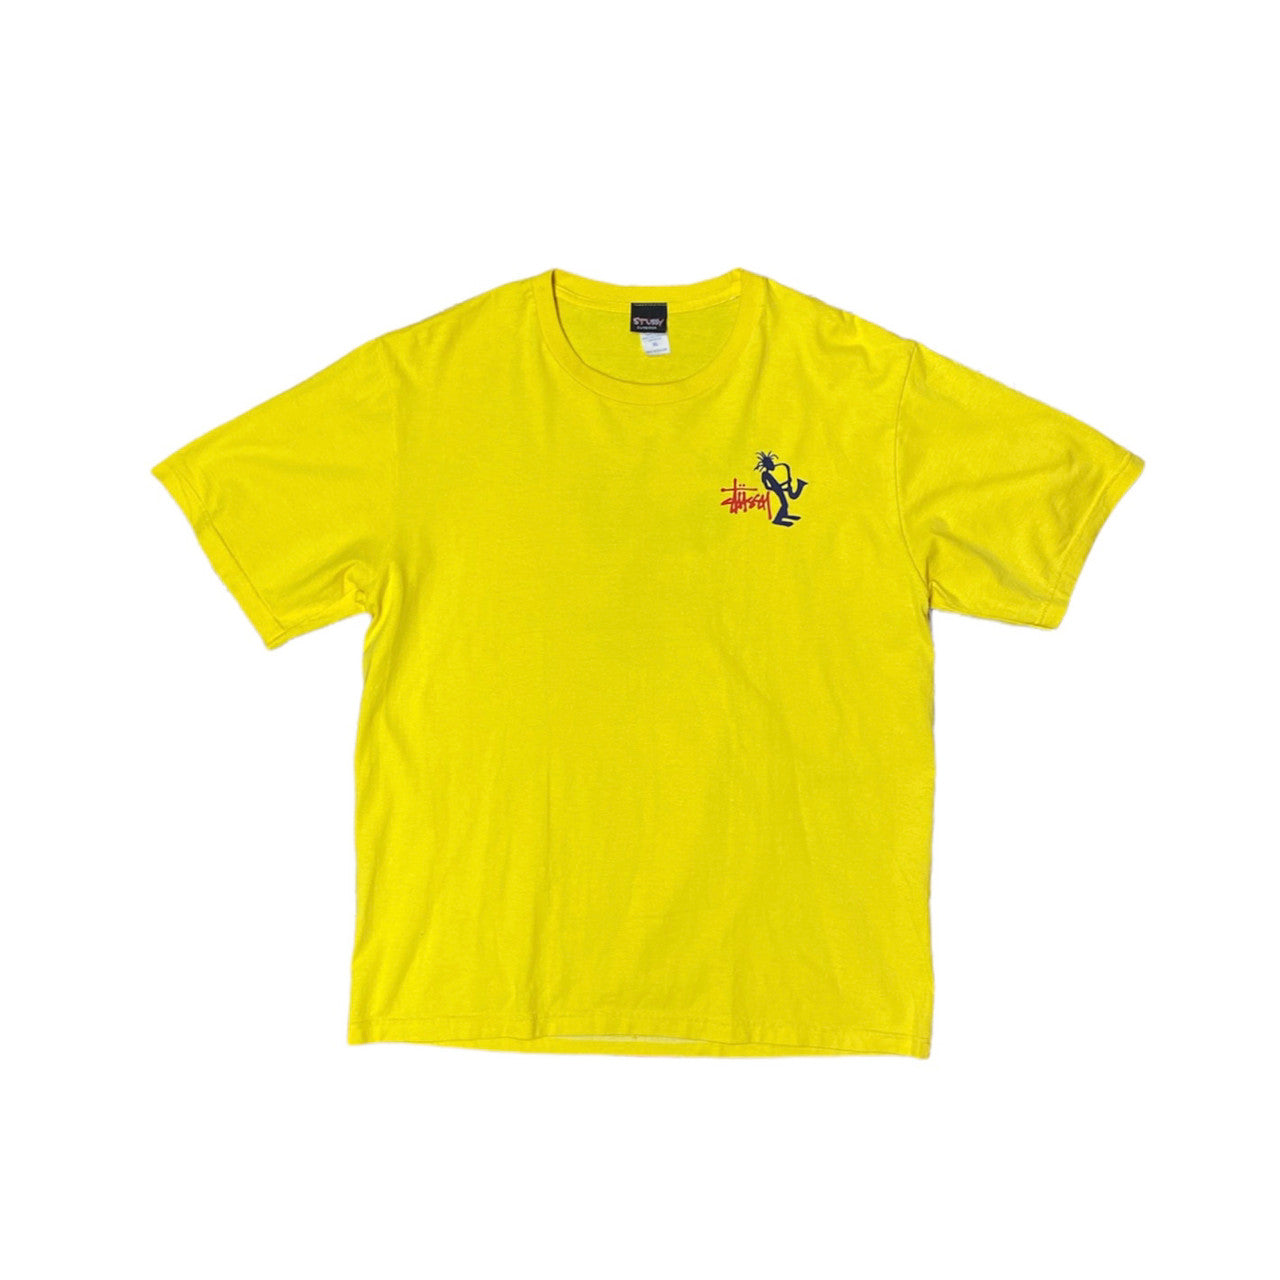 Vintage Stussy Outdoor Yellow Tshirt